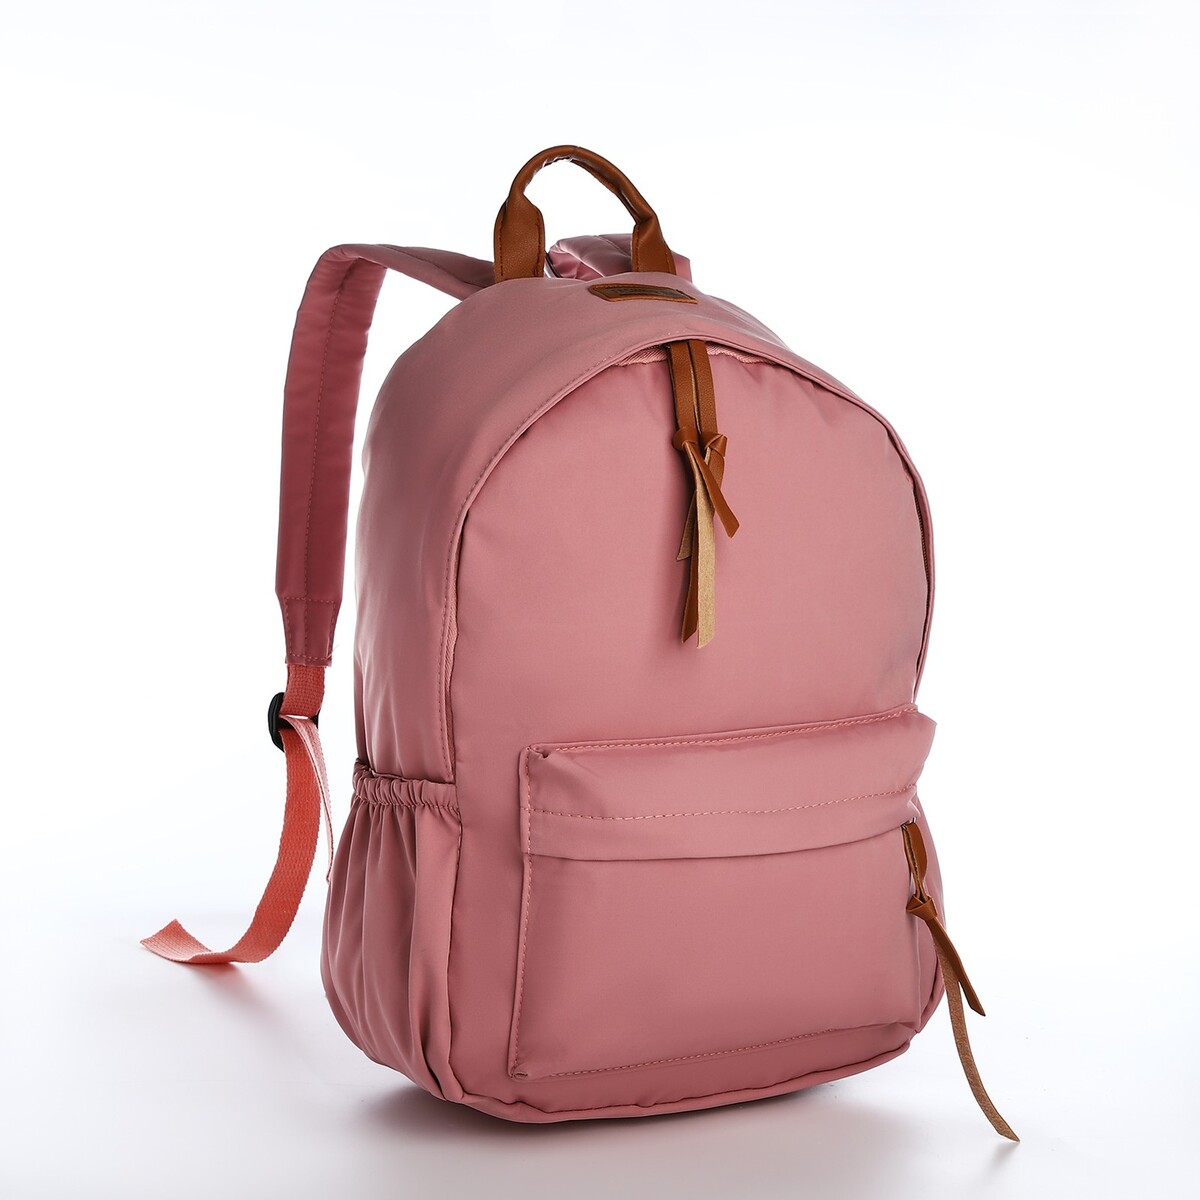 Рюкзак молодежный из текстиля на молнии, 4 кармана, цвет розовый рюкзак молодежный из текстиля 3 кармана белый розовый